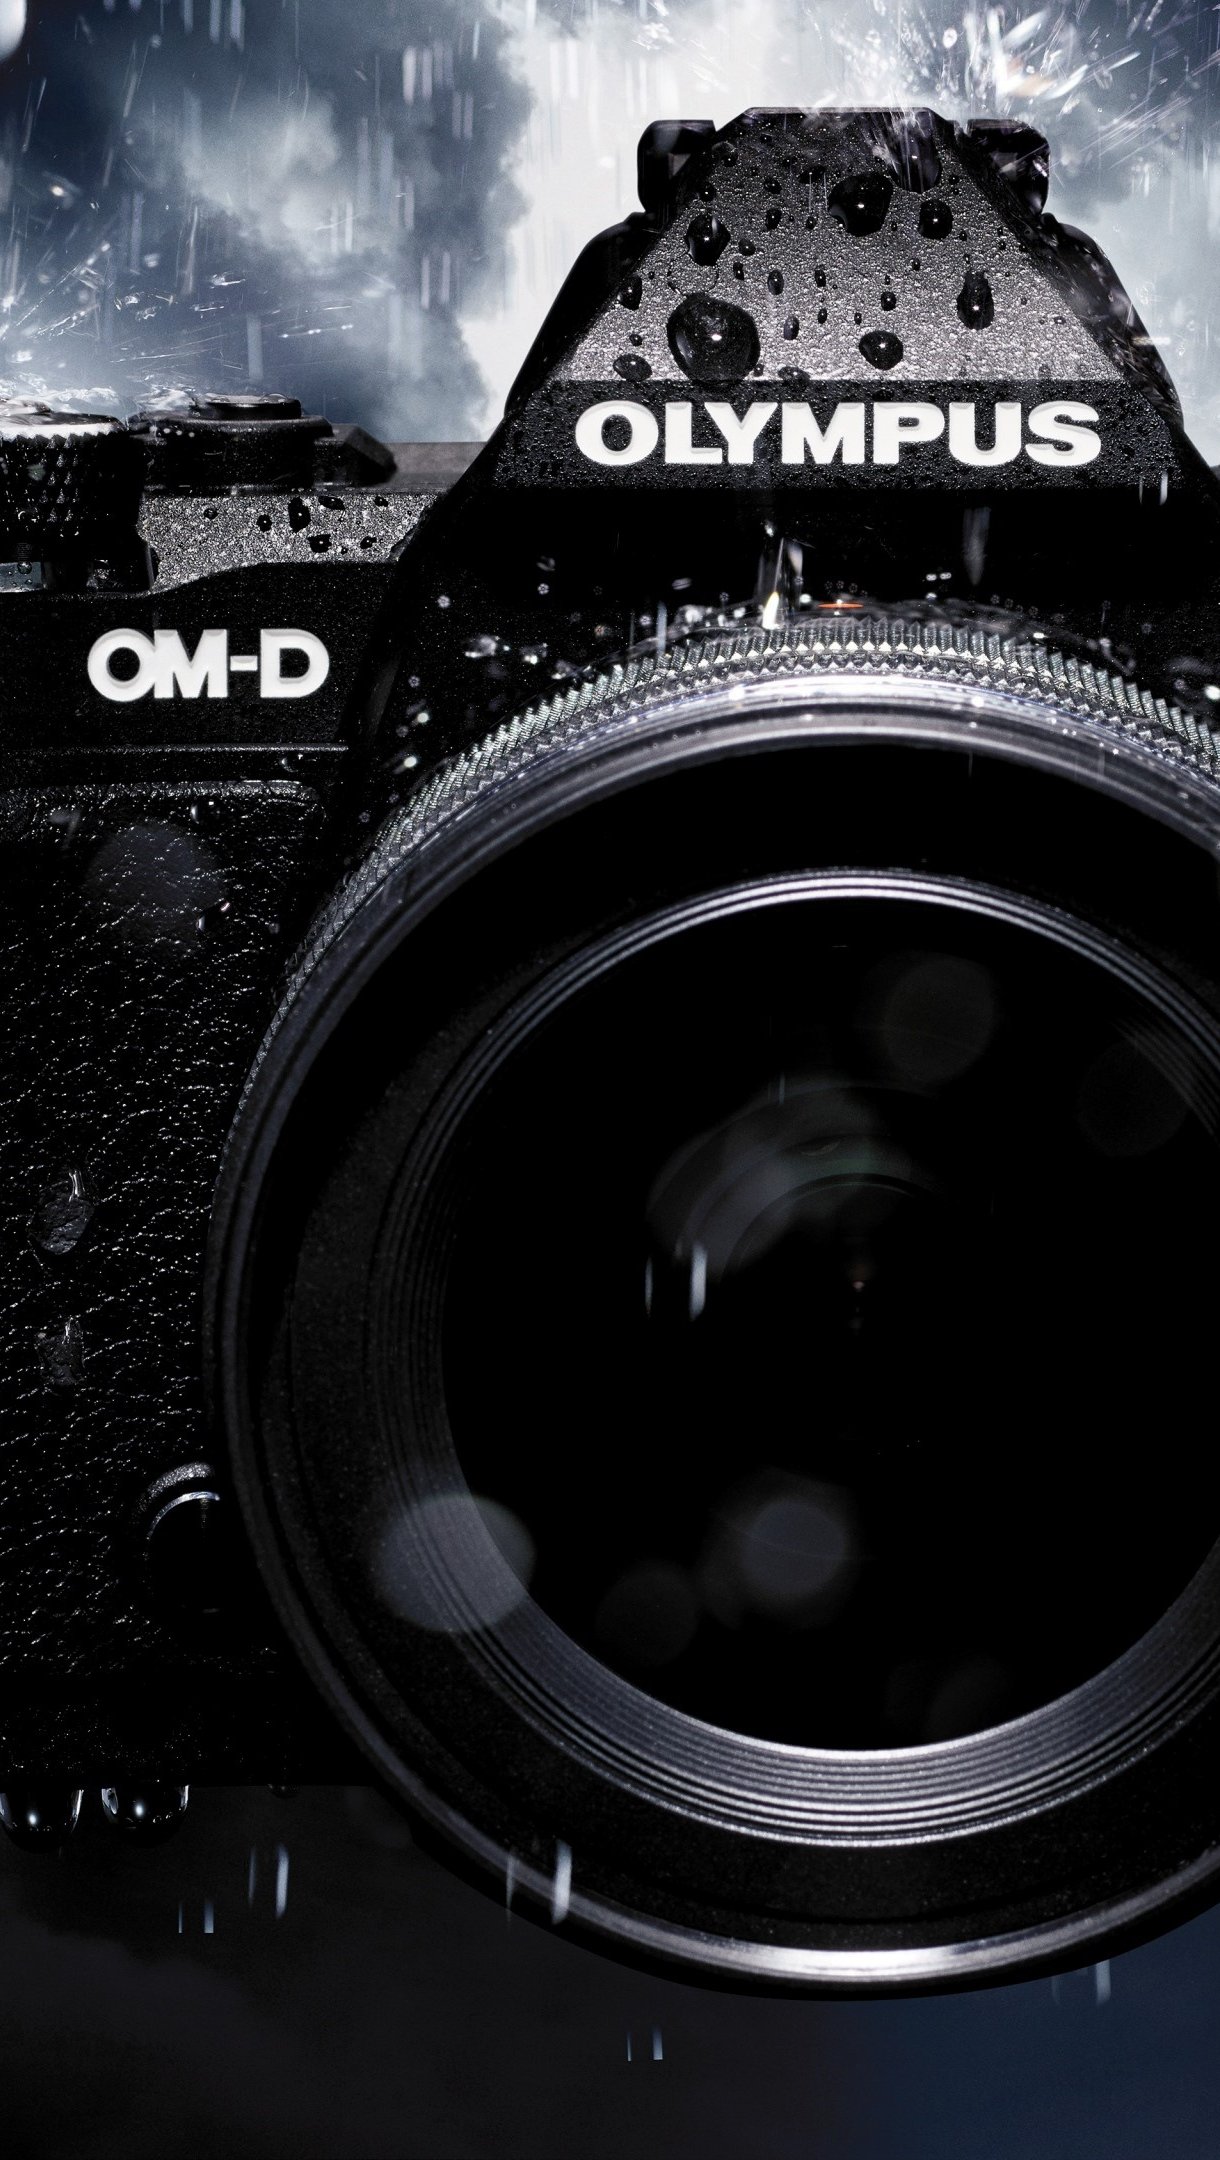 Olympus OM-D camera Wallpaper 4k Ultra HD ID:2477